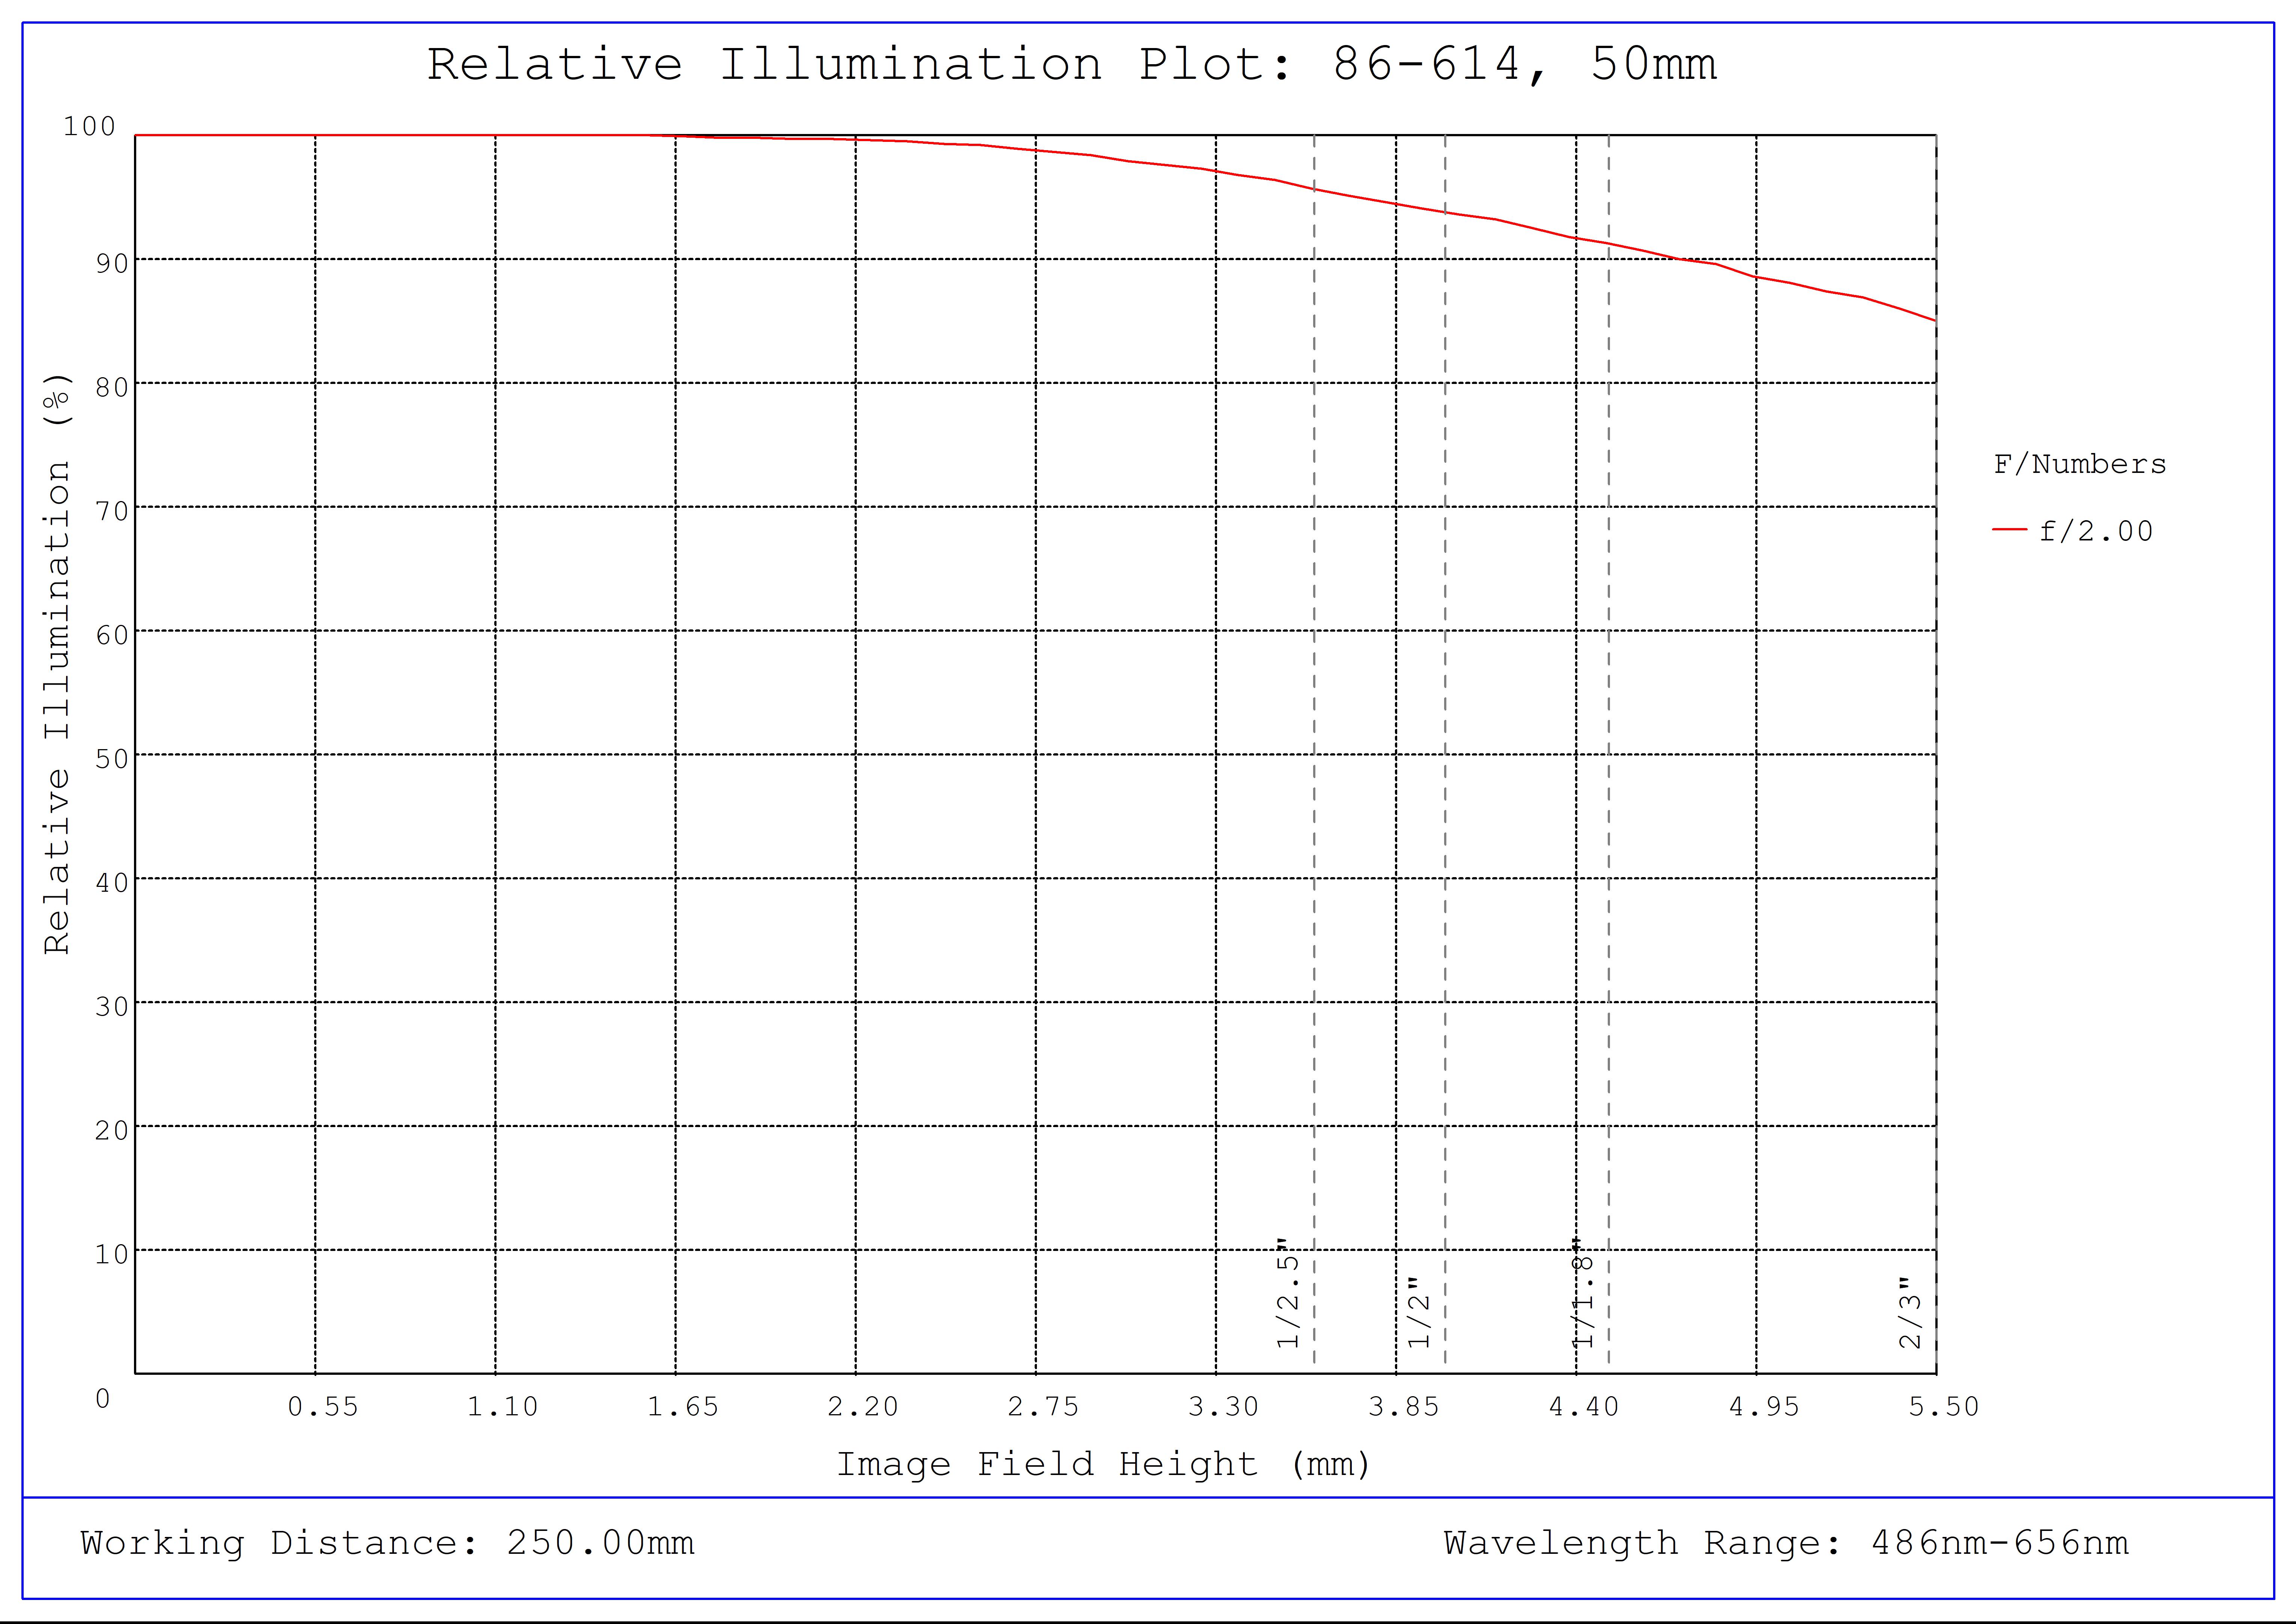 #86-614, 50mm, f/2.0 Ci Series Fixed Focal Length Lens, Relative Illumination Plot